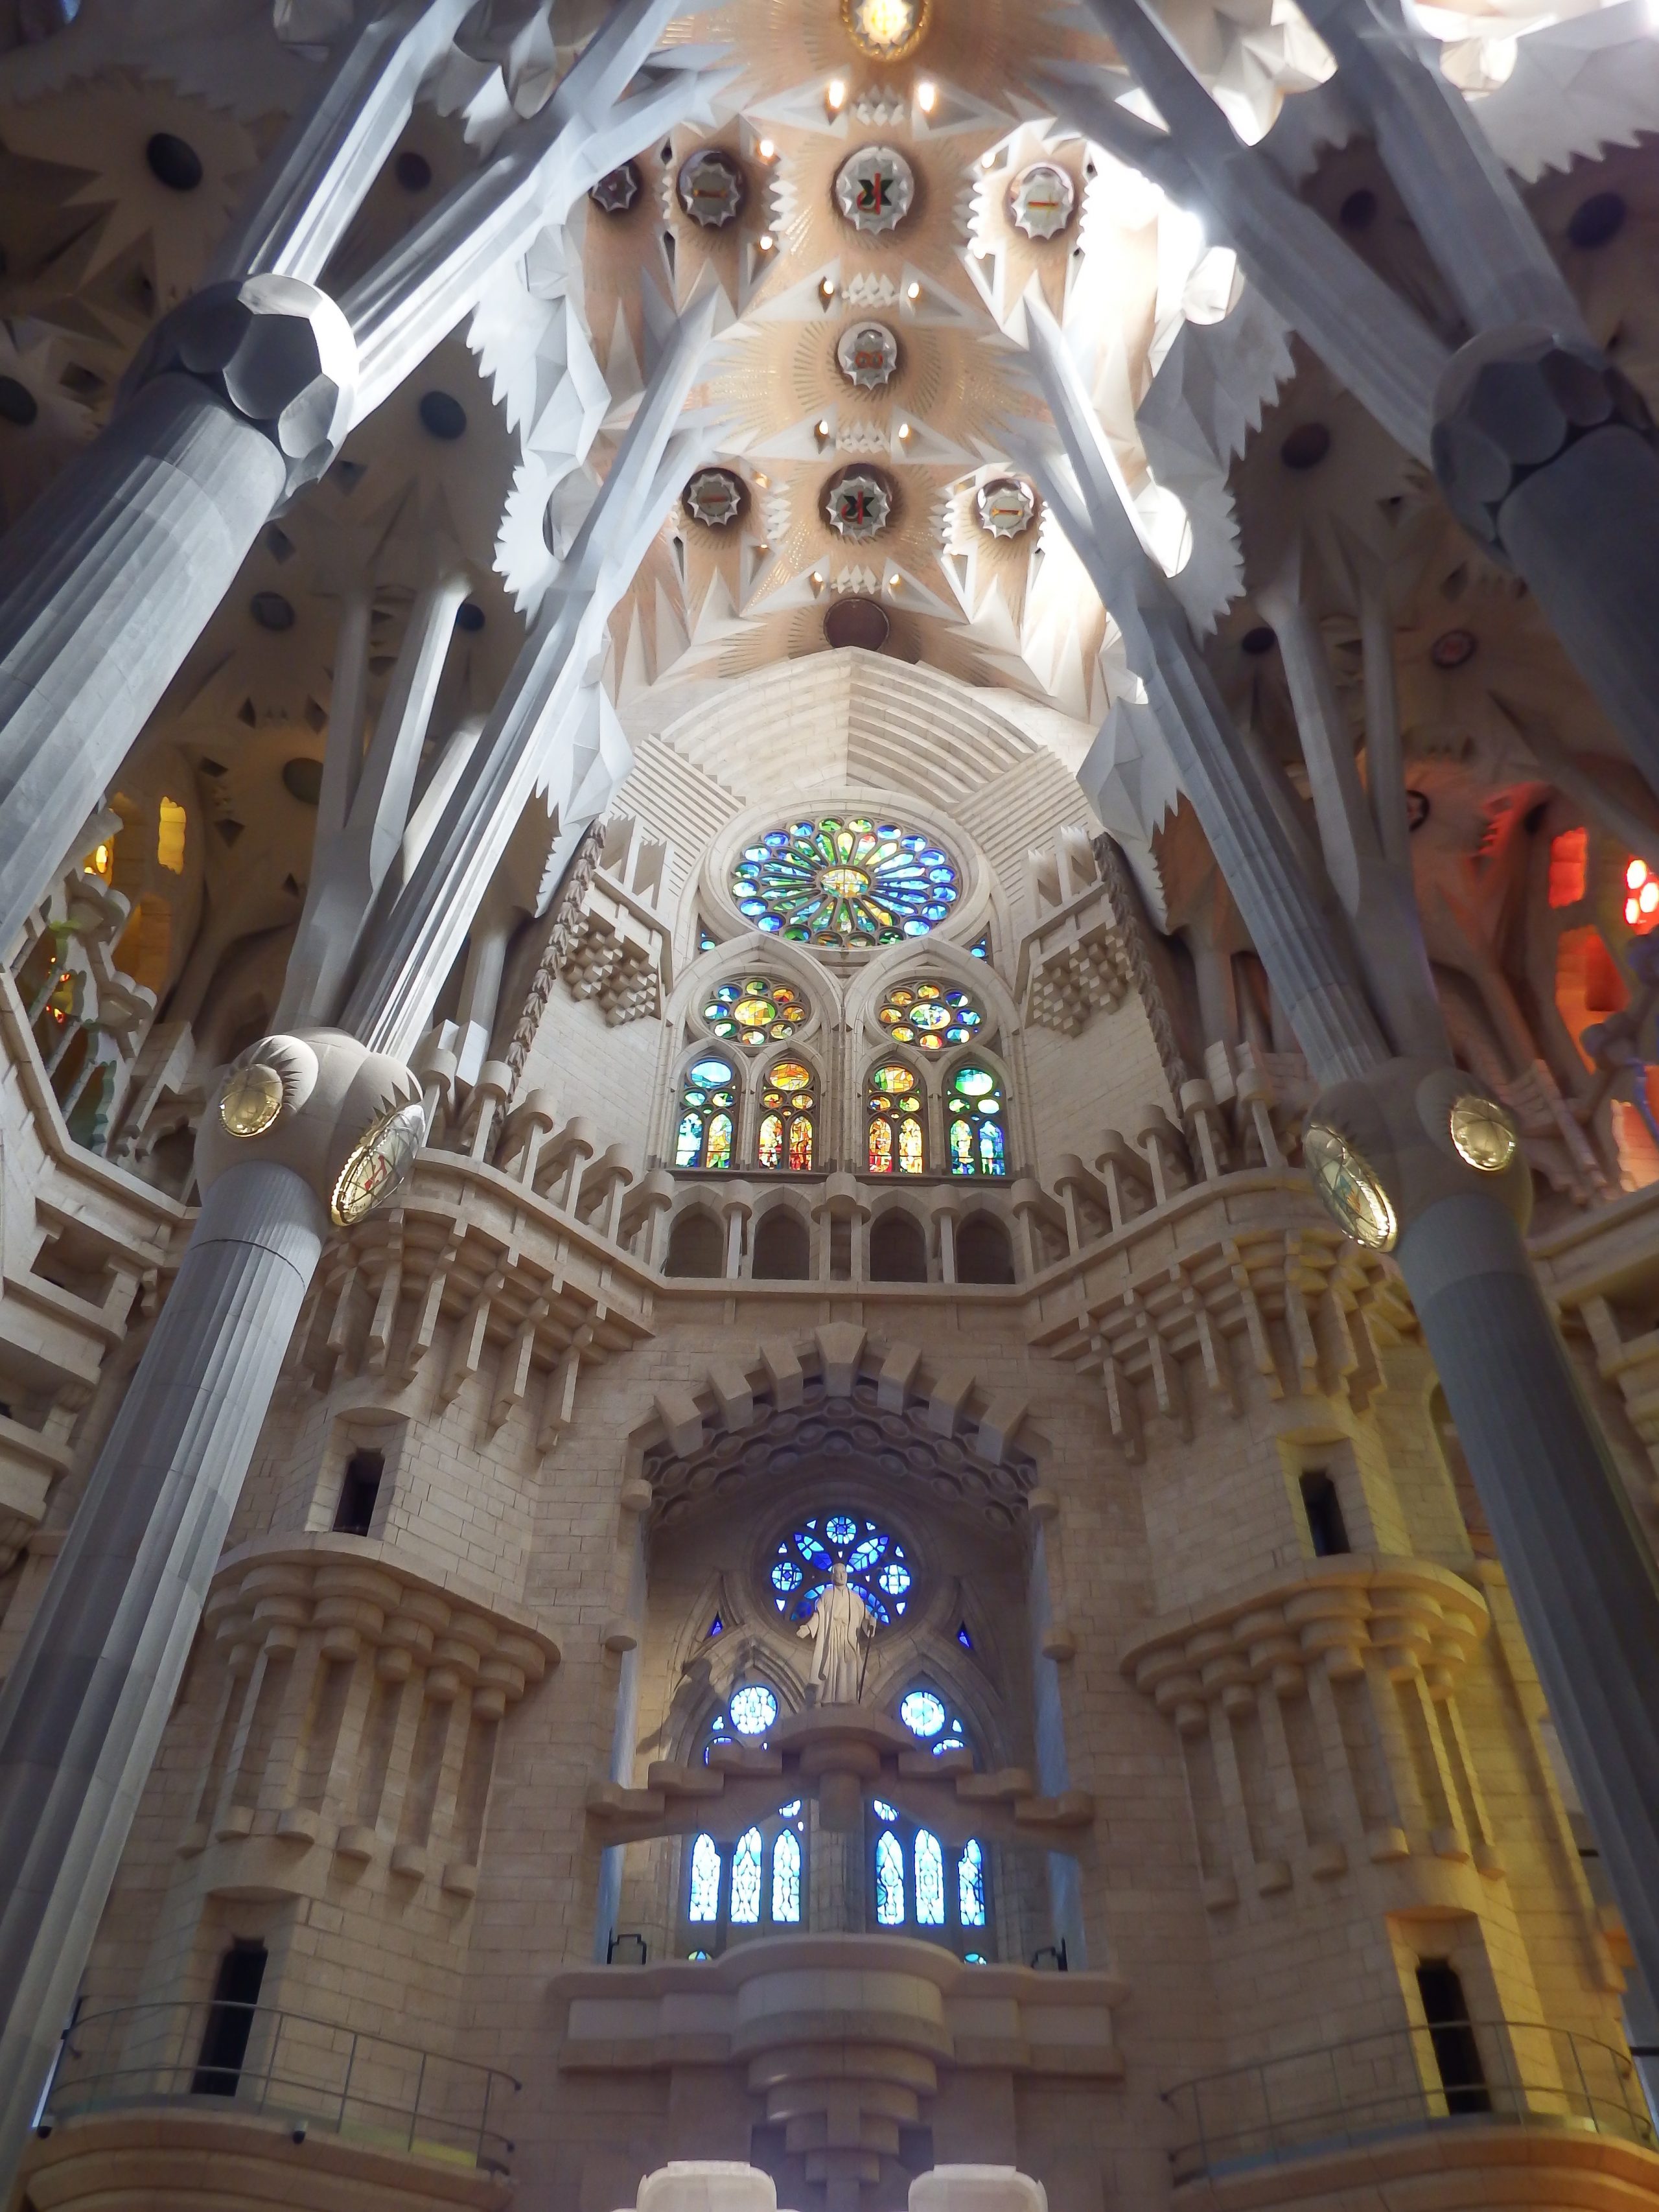 The interior of Gaudí's Sagrada Familia in Barcelona, Spain